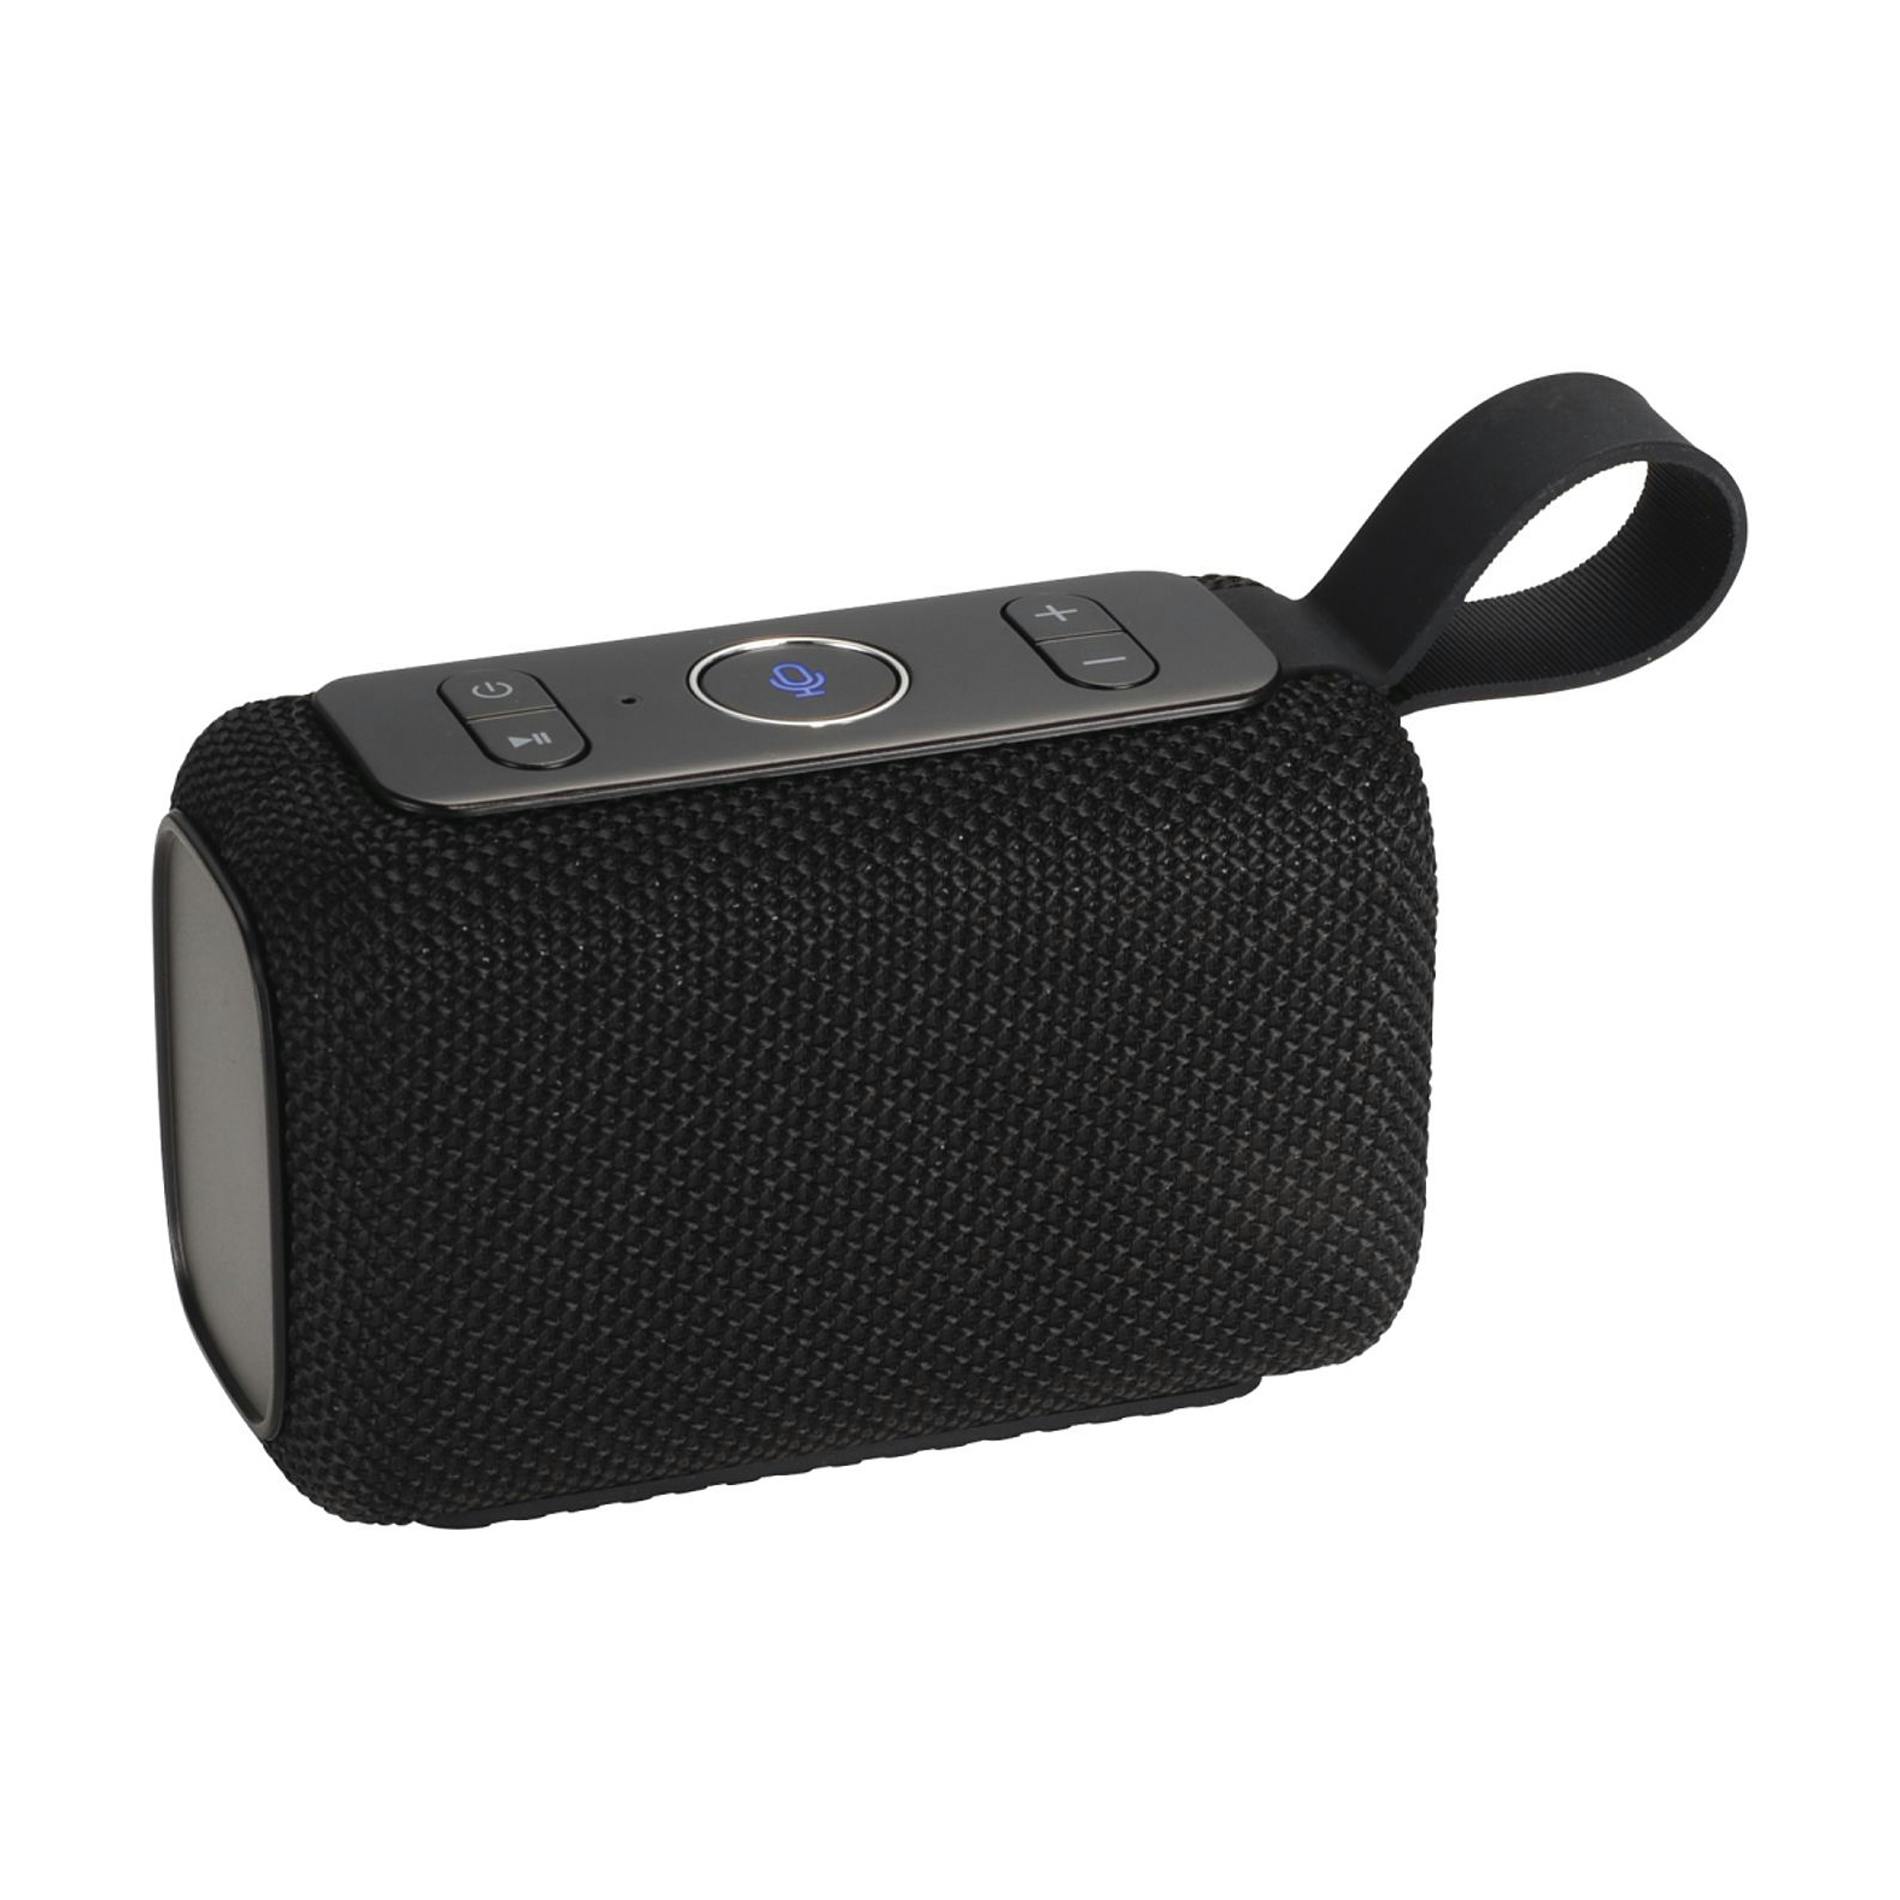 Outdoor Bluetooth Speaker with Amazon Alexa - additional Image 1